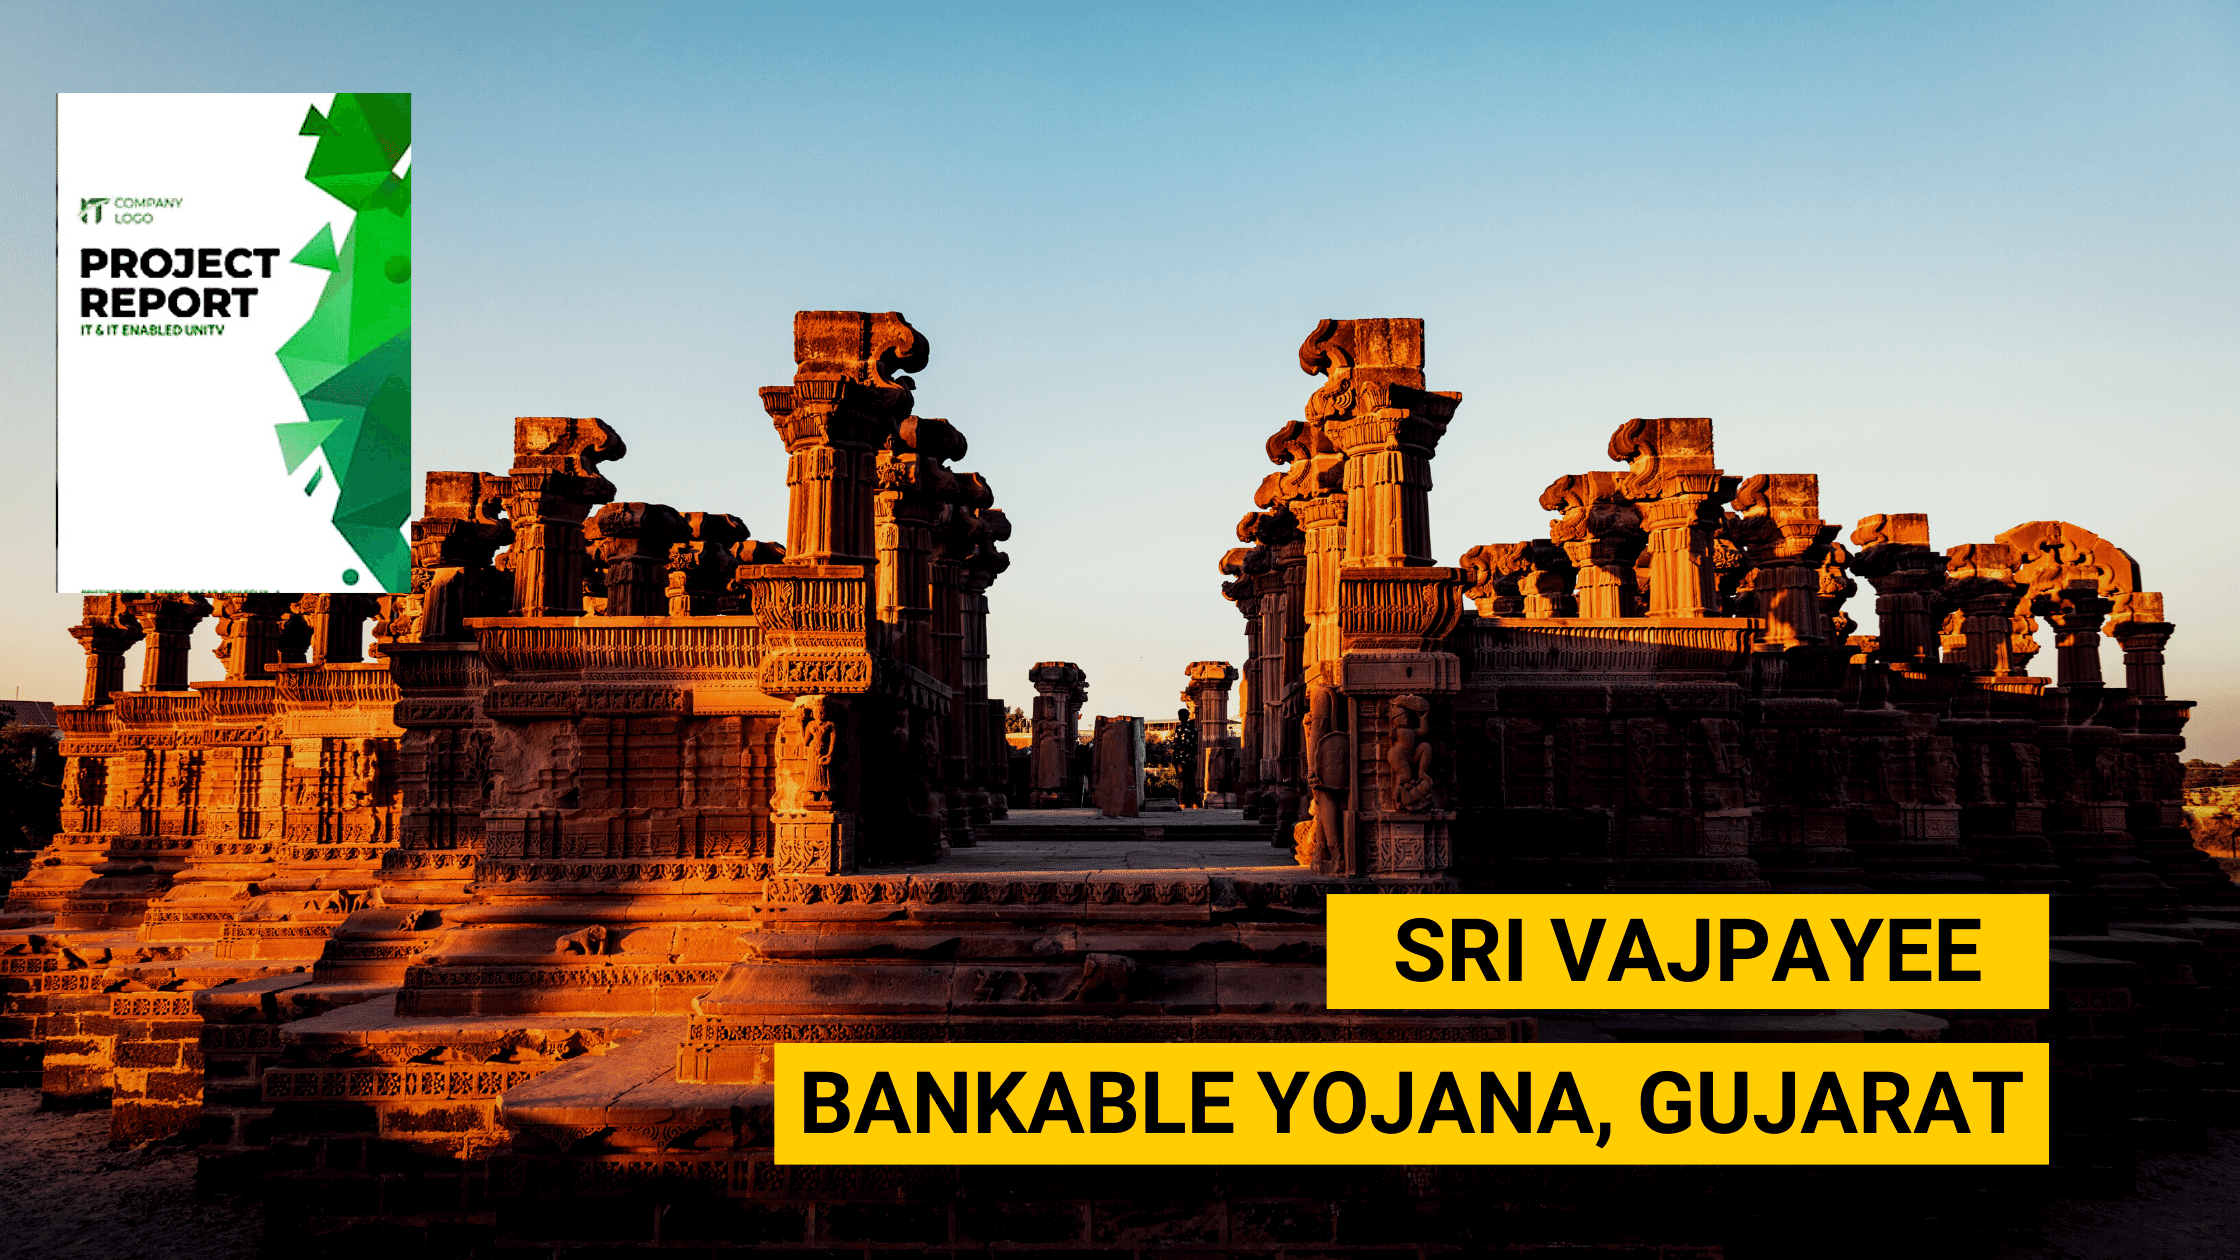 Sri Vajpayee Bankable Yojana, Gujarat